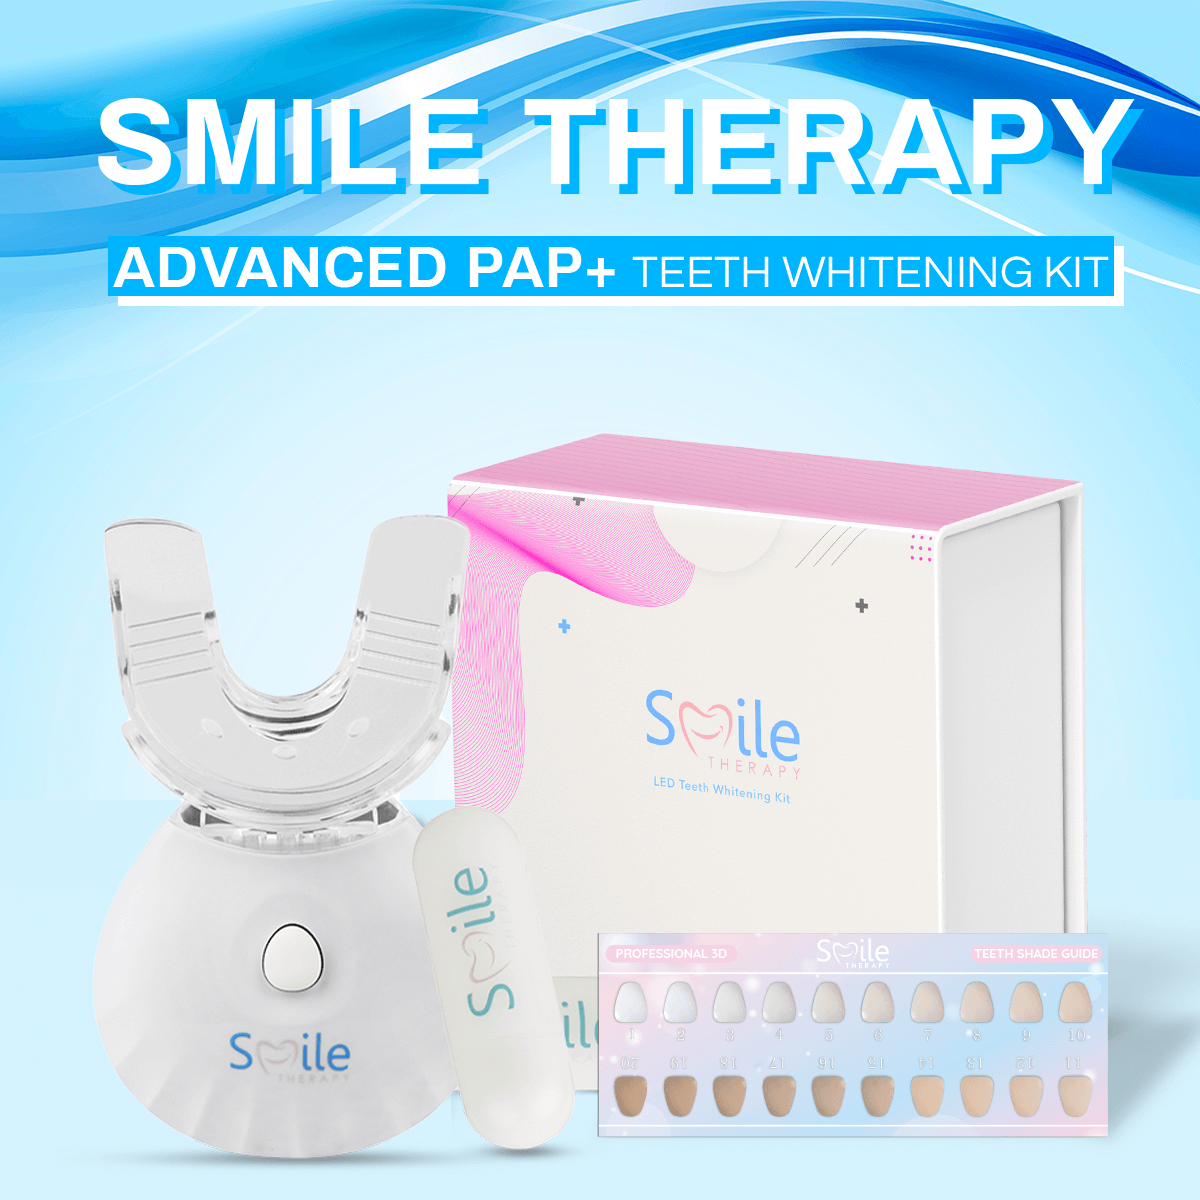 PAP+ Teeth Whitening Kit - Smile Therapy